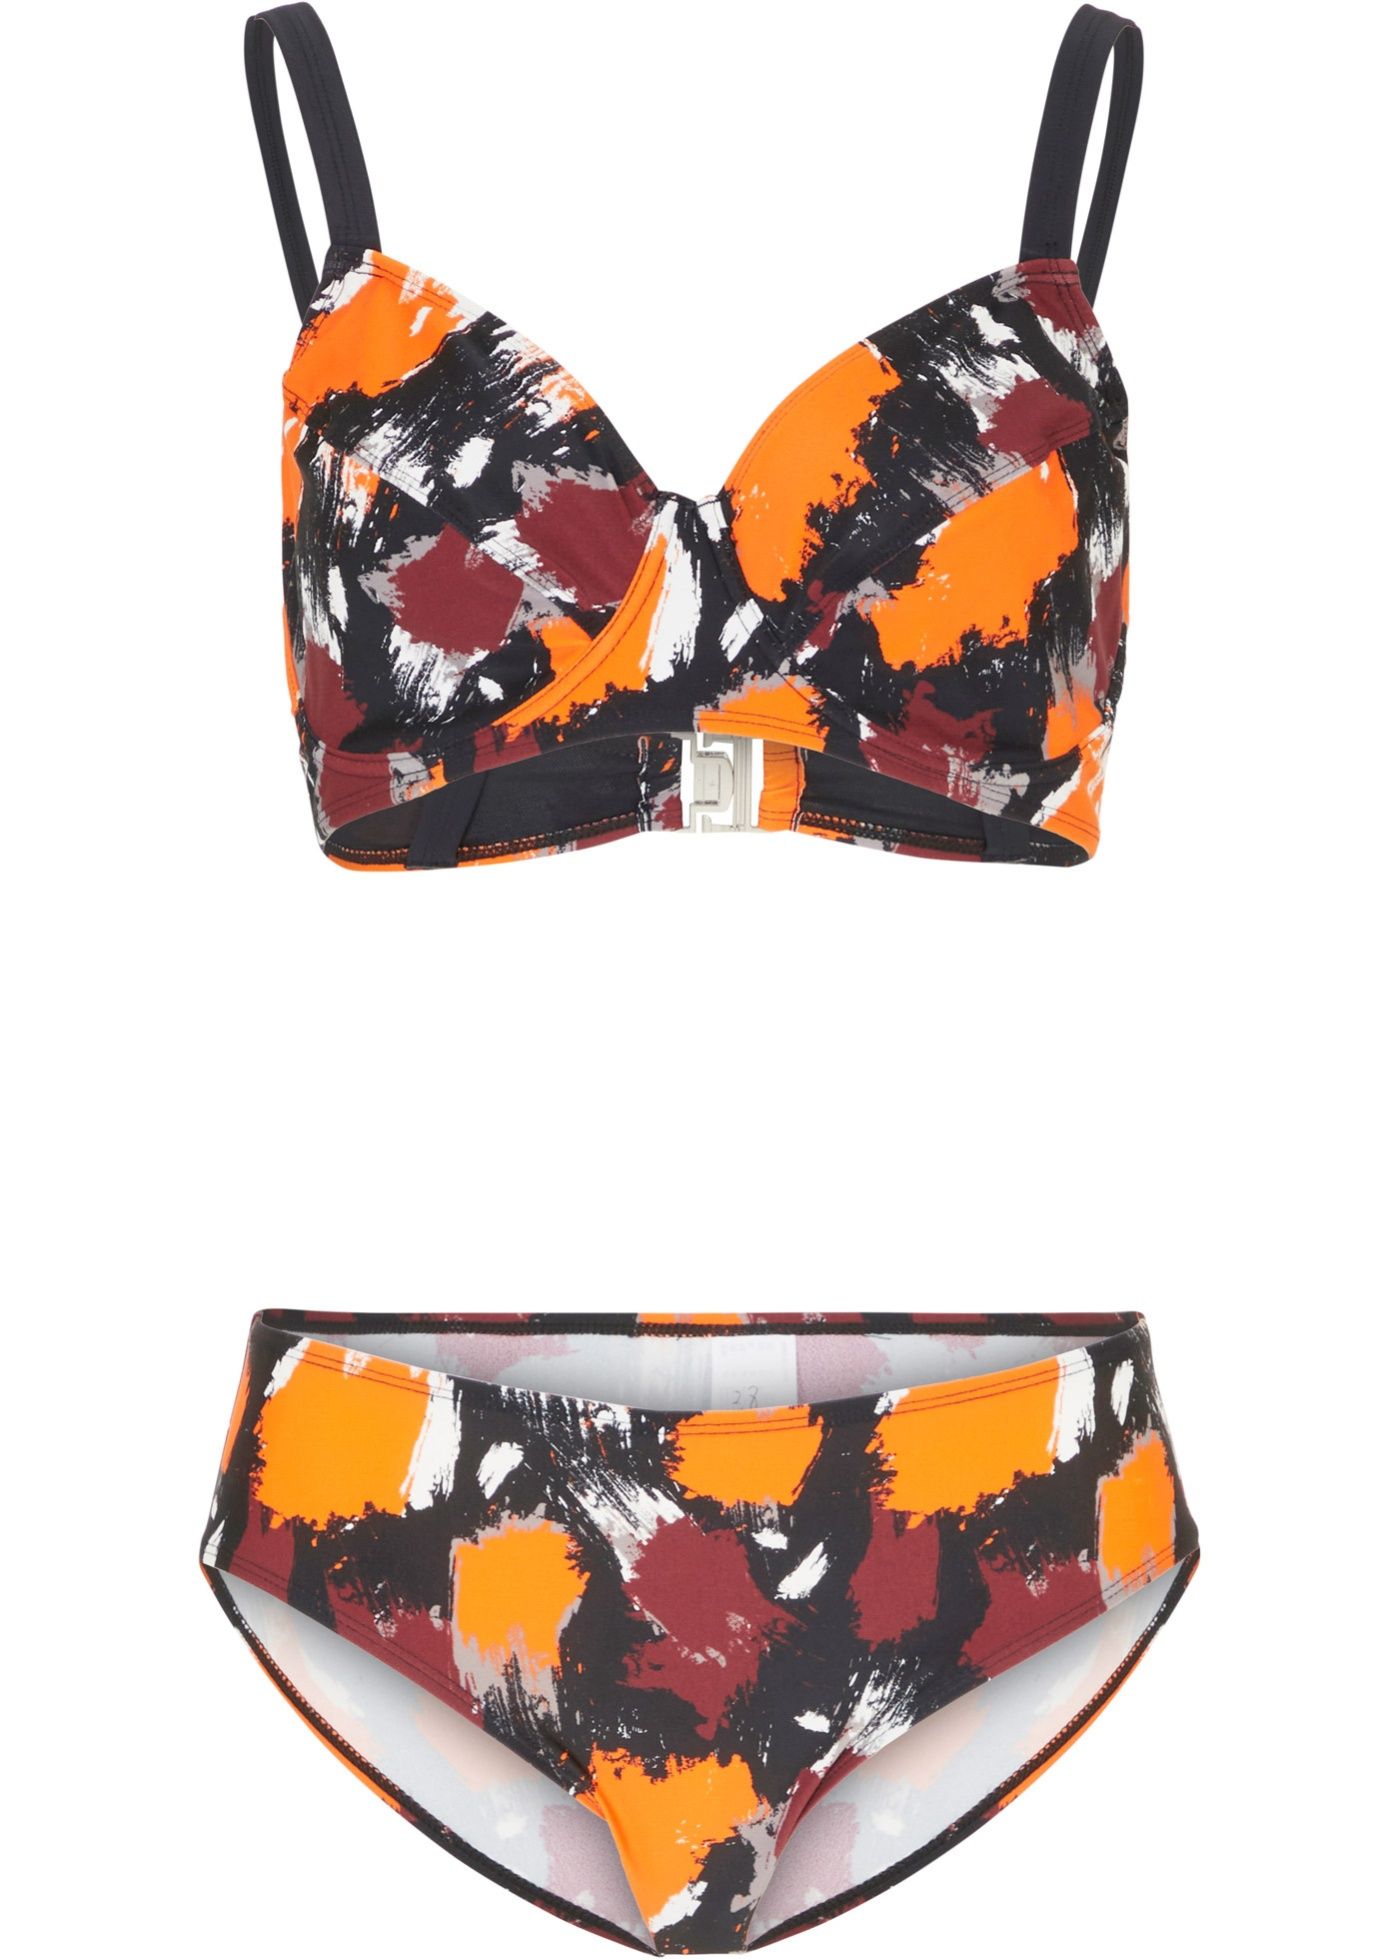 B.P.C bikini miękkie na fiszbinach kolorowe we wzory 38 (75E).